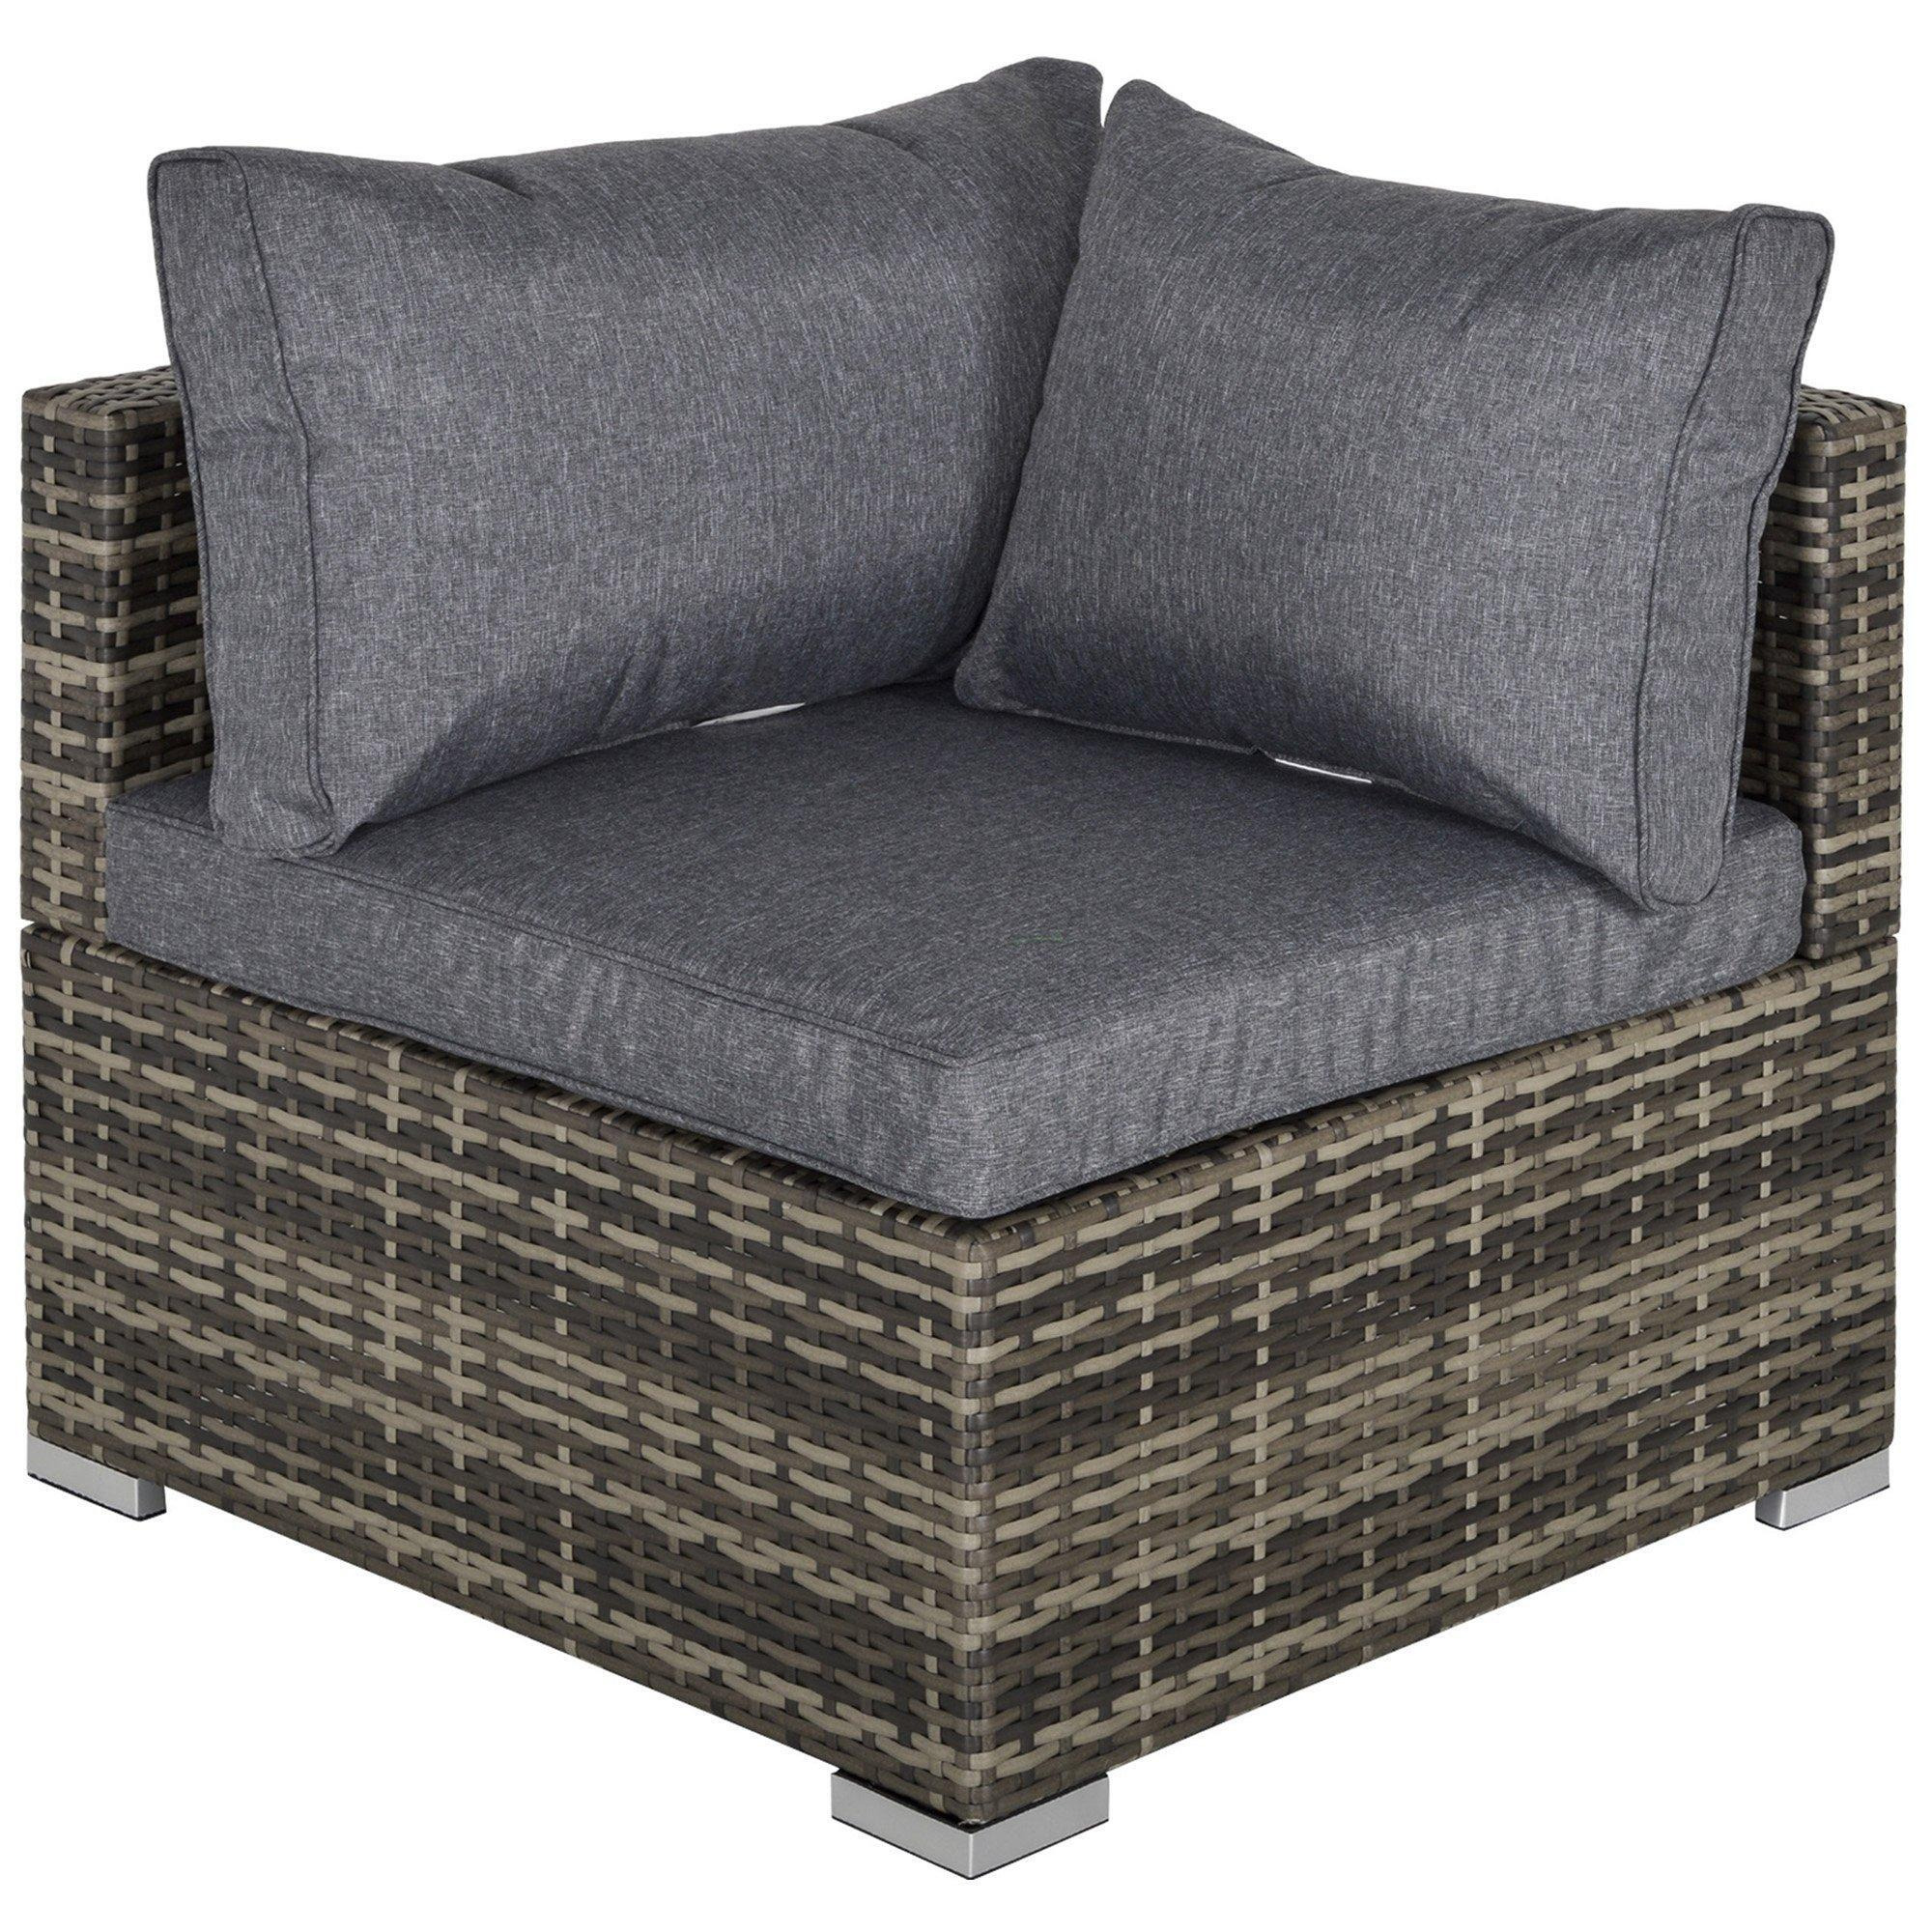 PE Rattan Wicker Corner Sofa Garden Single Sofa Chair with Cushions - image 1